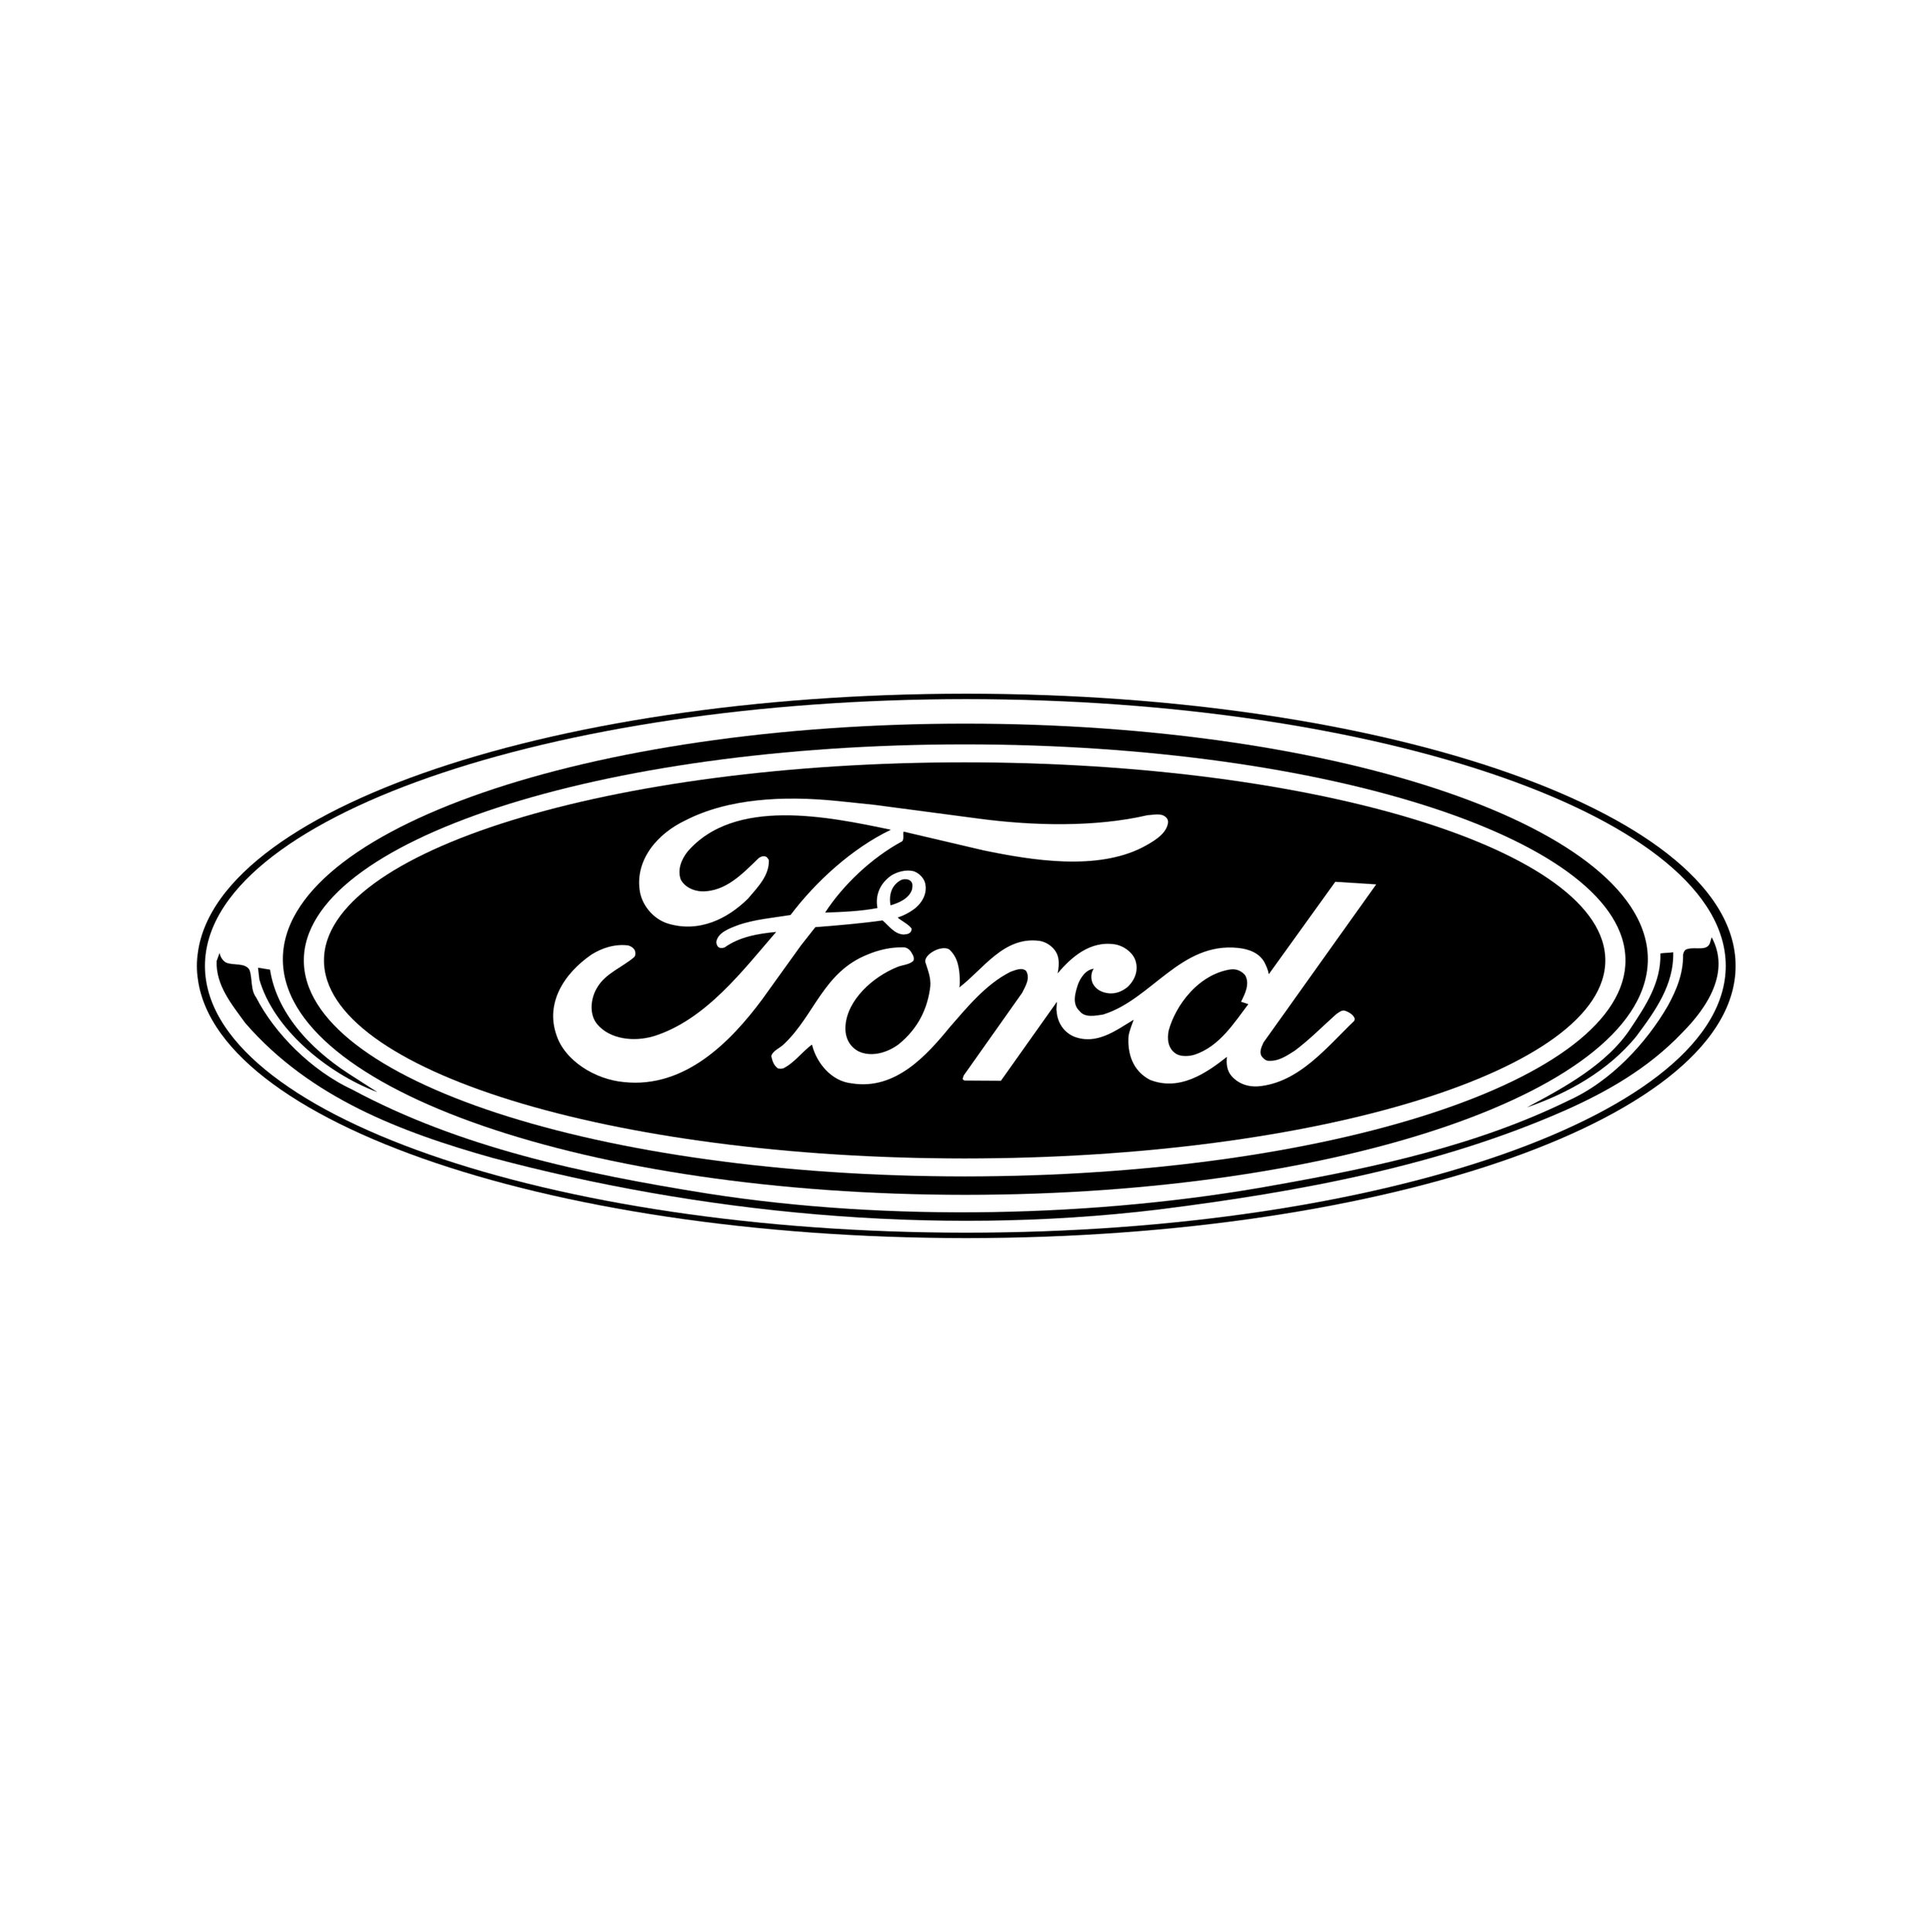 Ford Logo.jpg